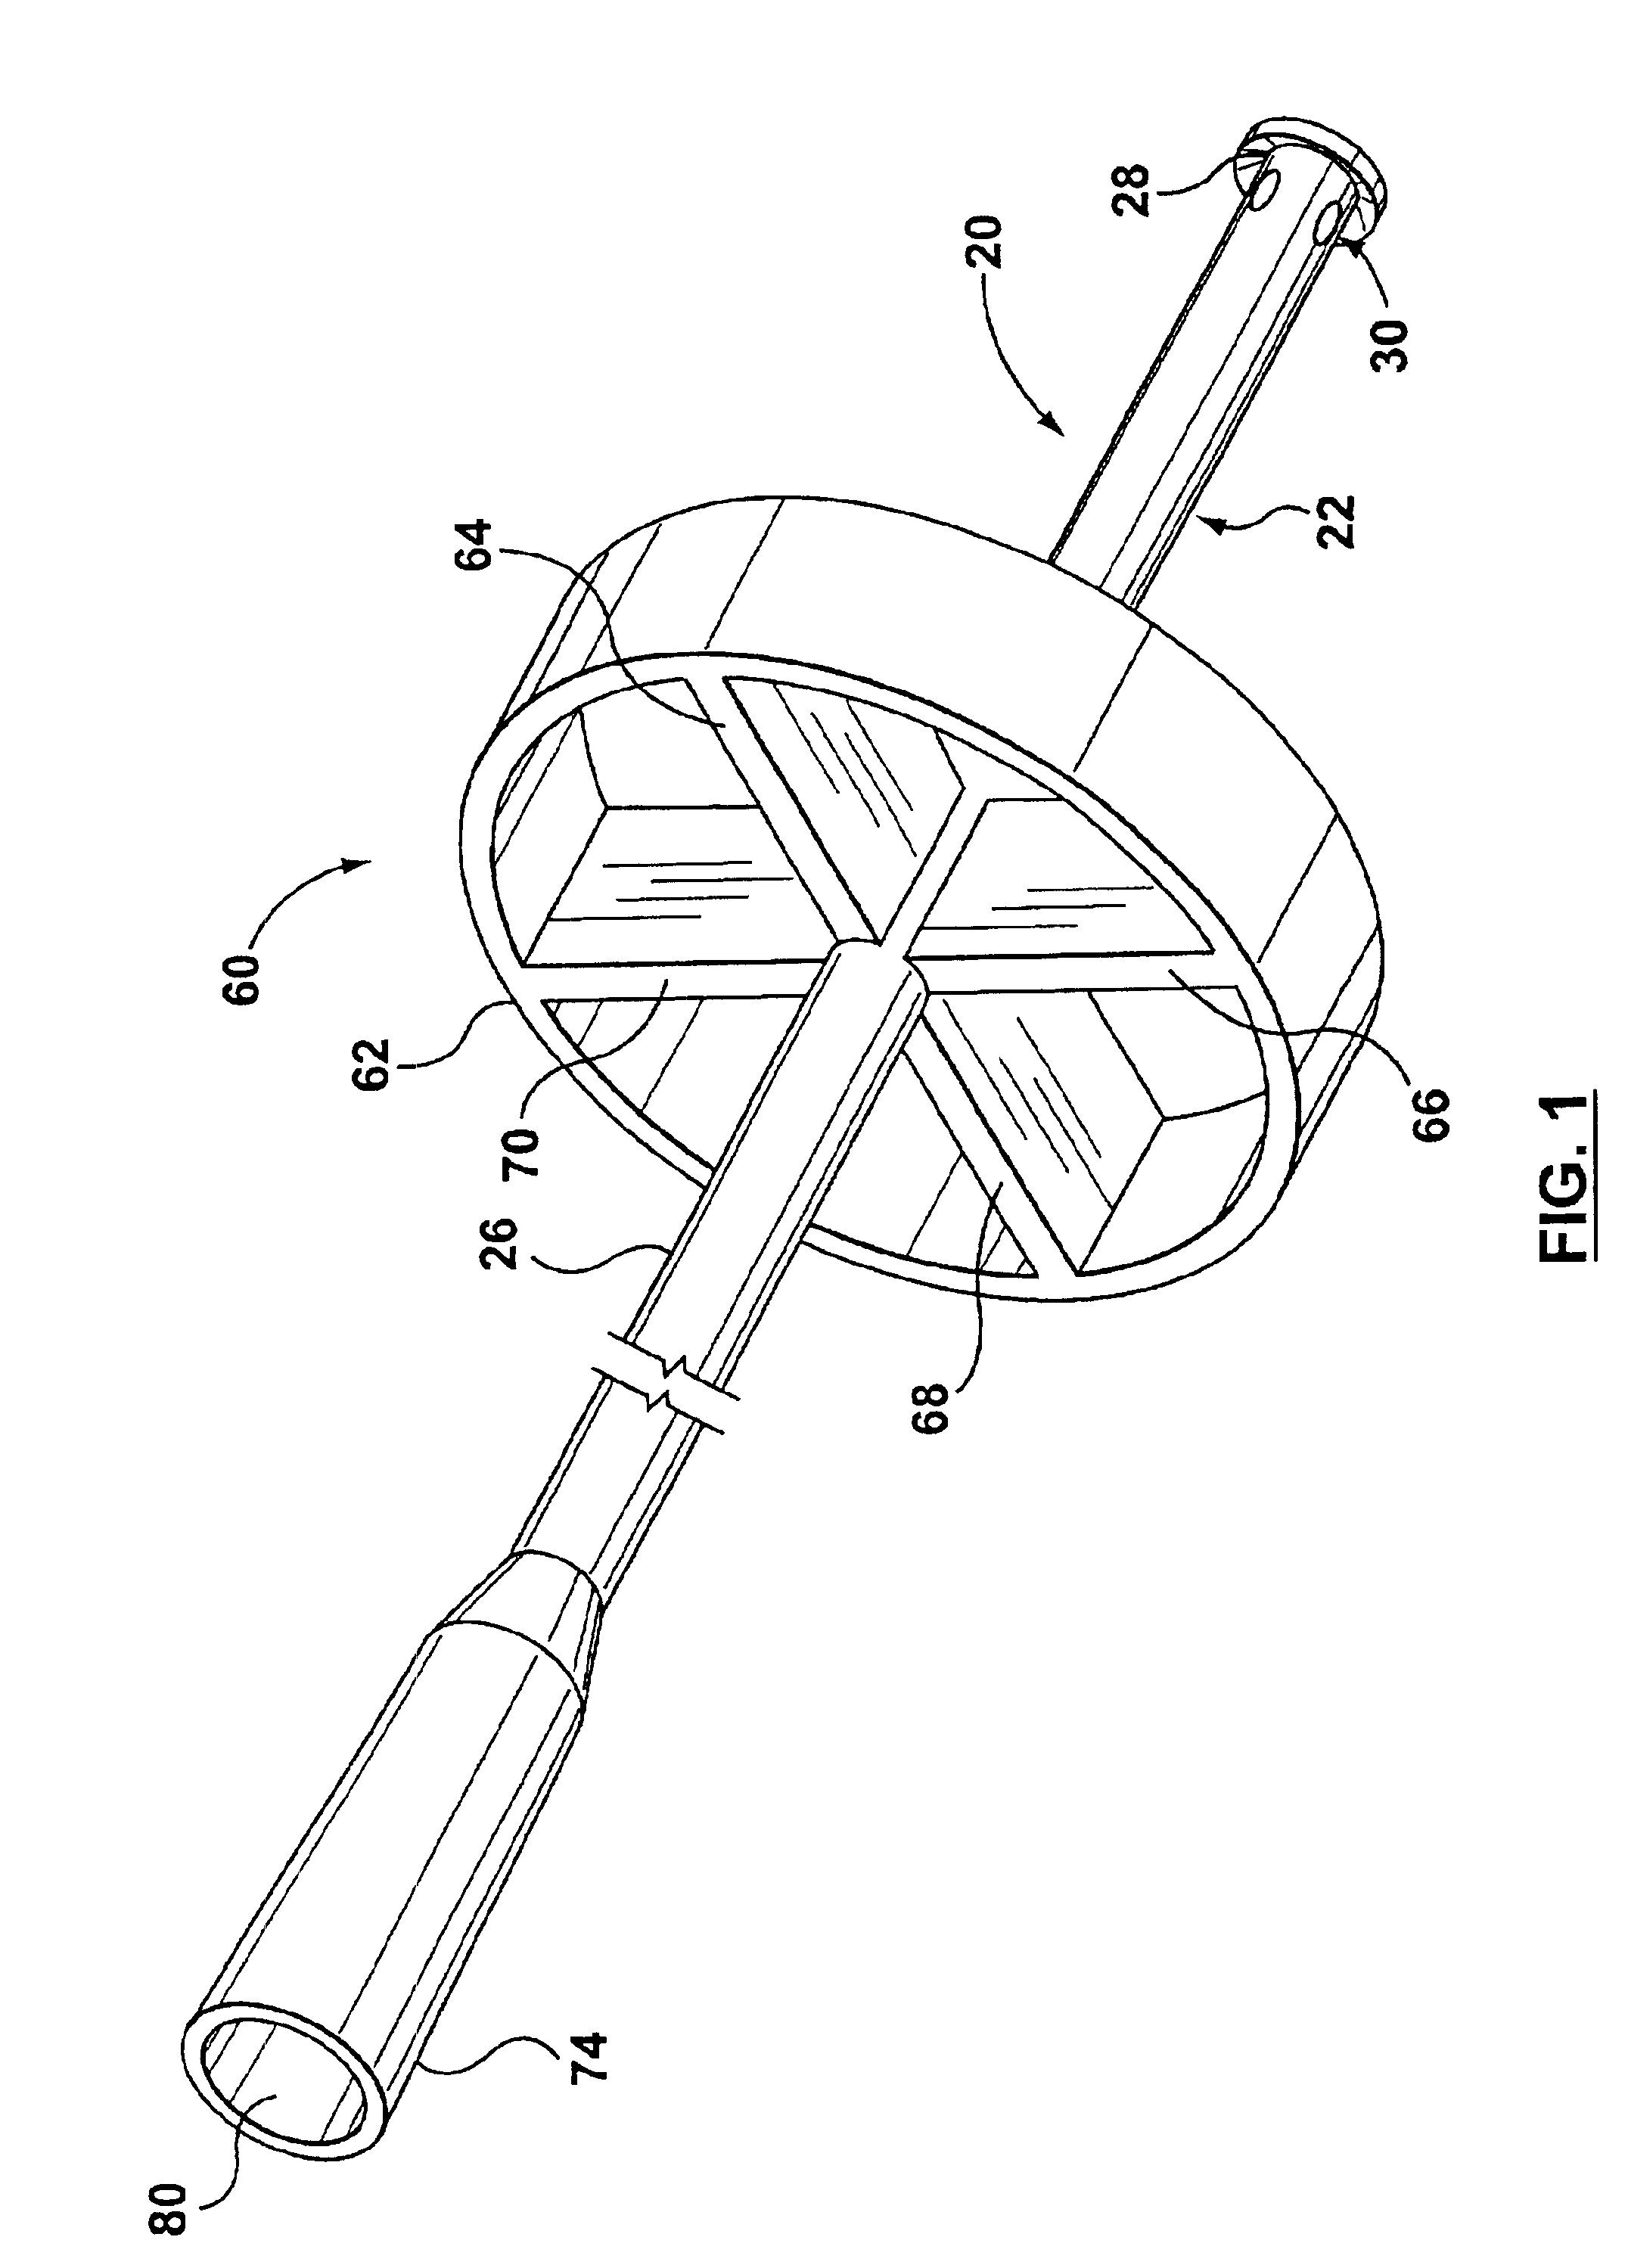 Ear irrigation device